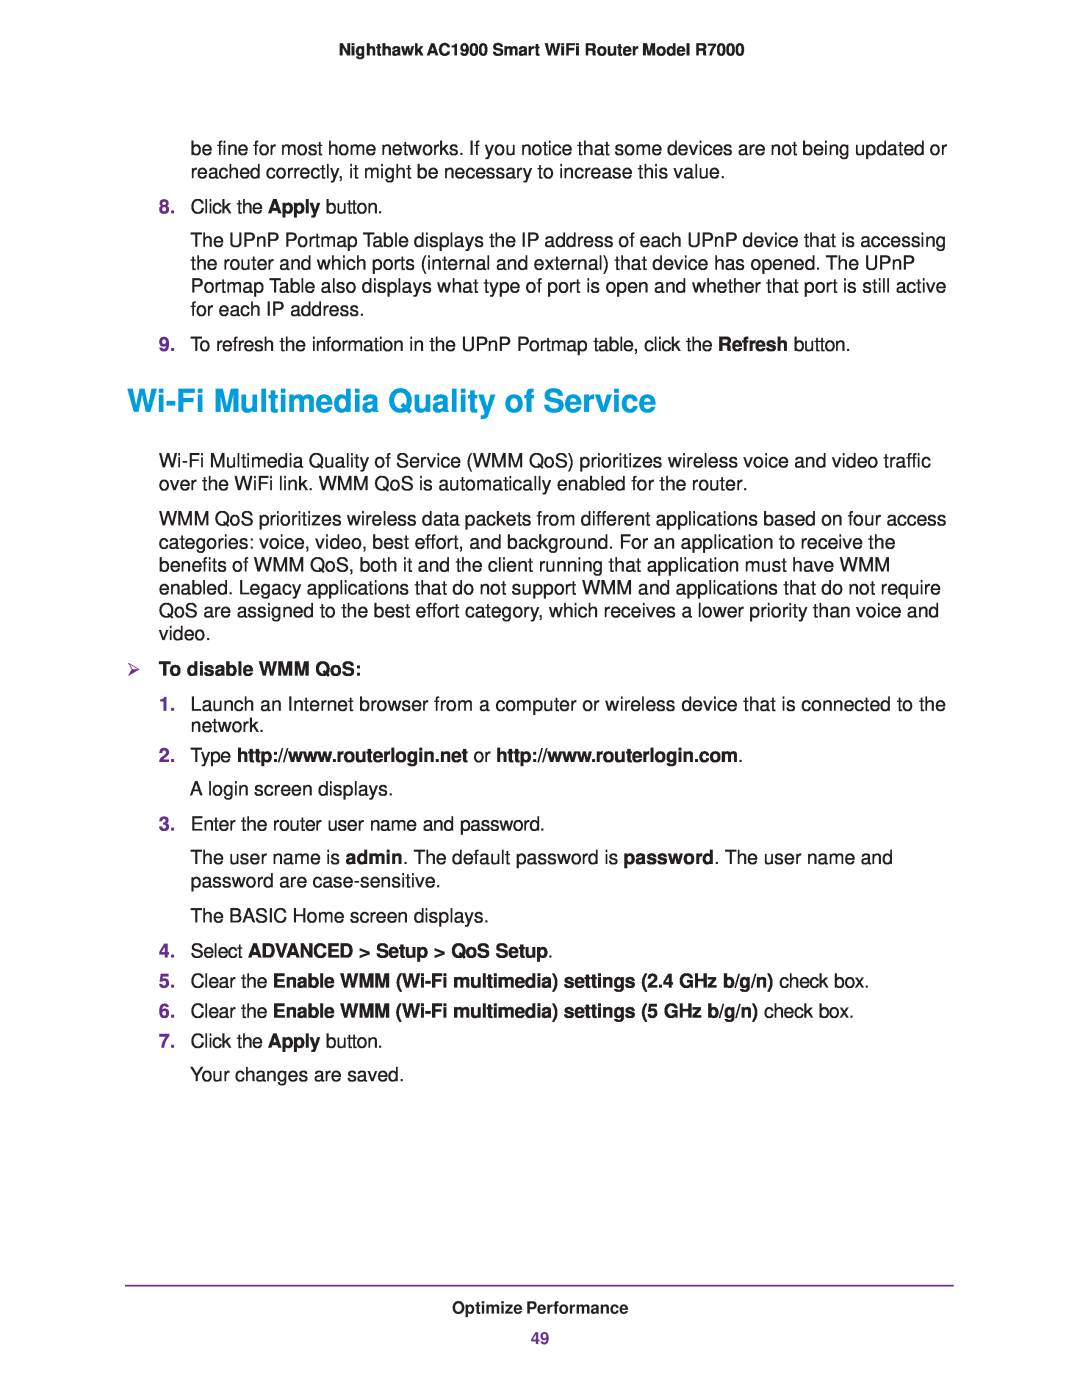 NETGEAR R7000 user manual Wi-Fi Multimedia Quality of Service,  To disable WMM QoS, Select ADVANCED Setup QoS Setup 